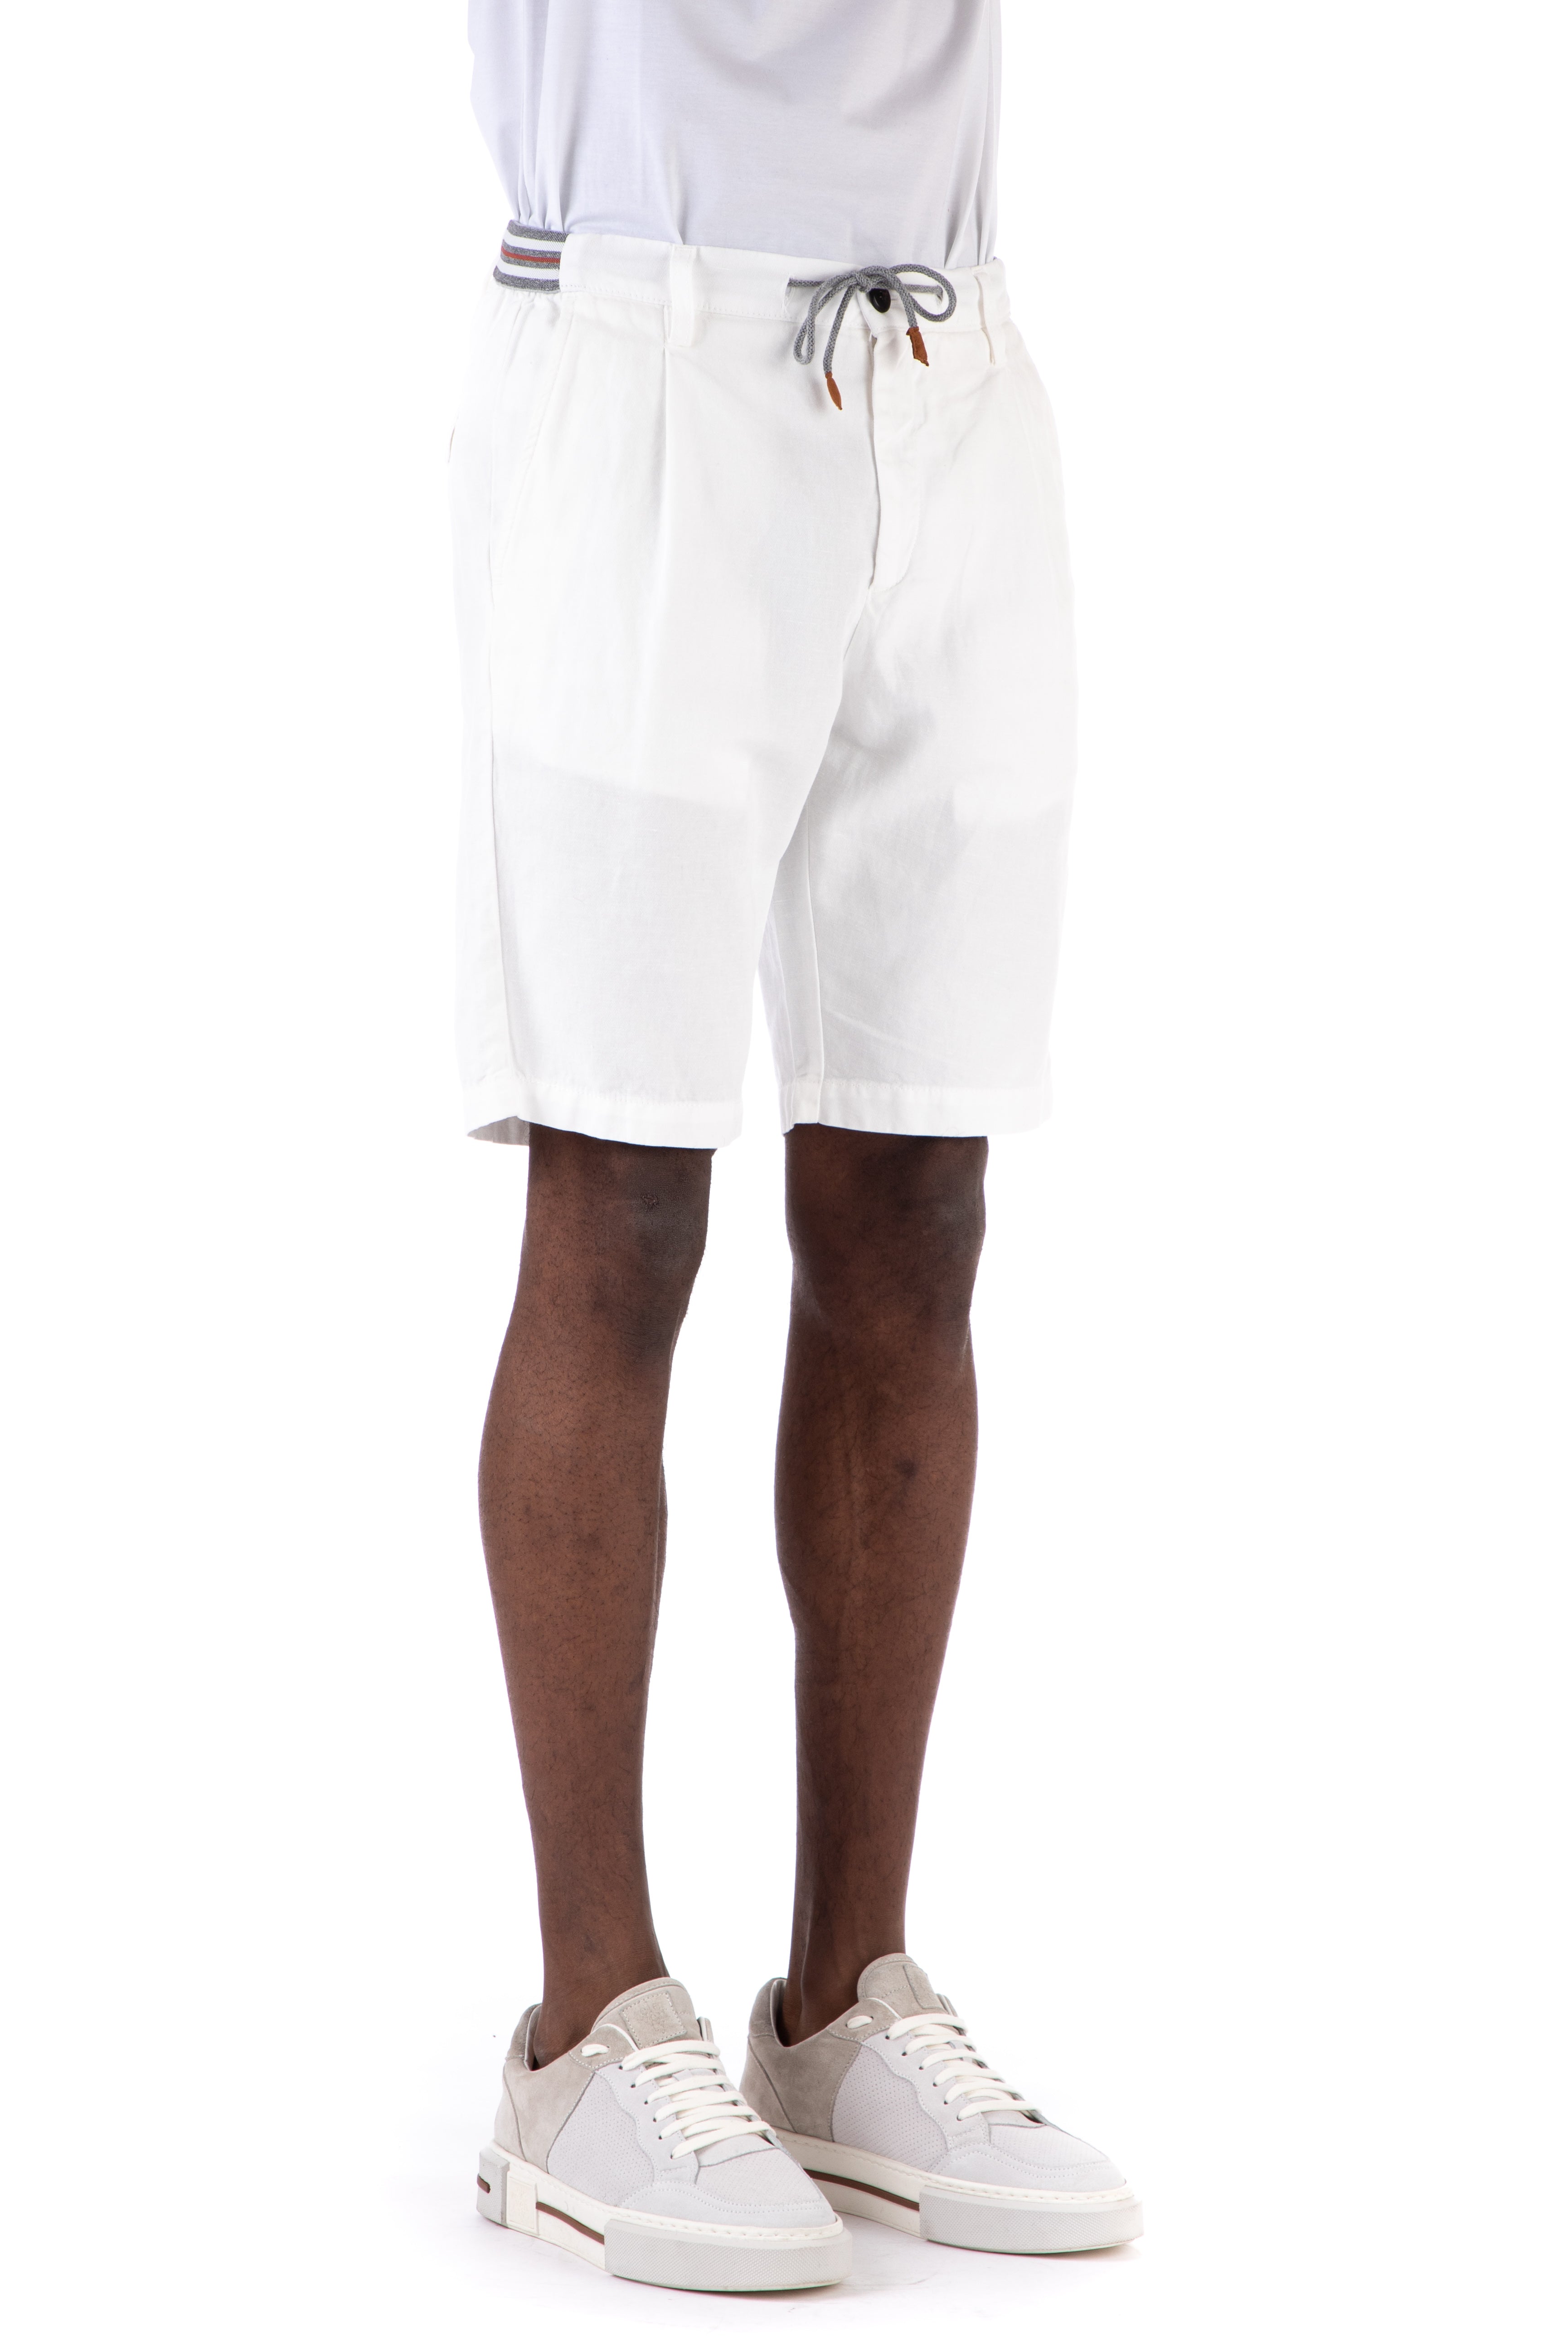 Jogging shorts in cotton-linen